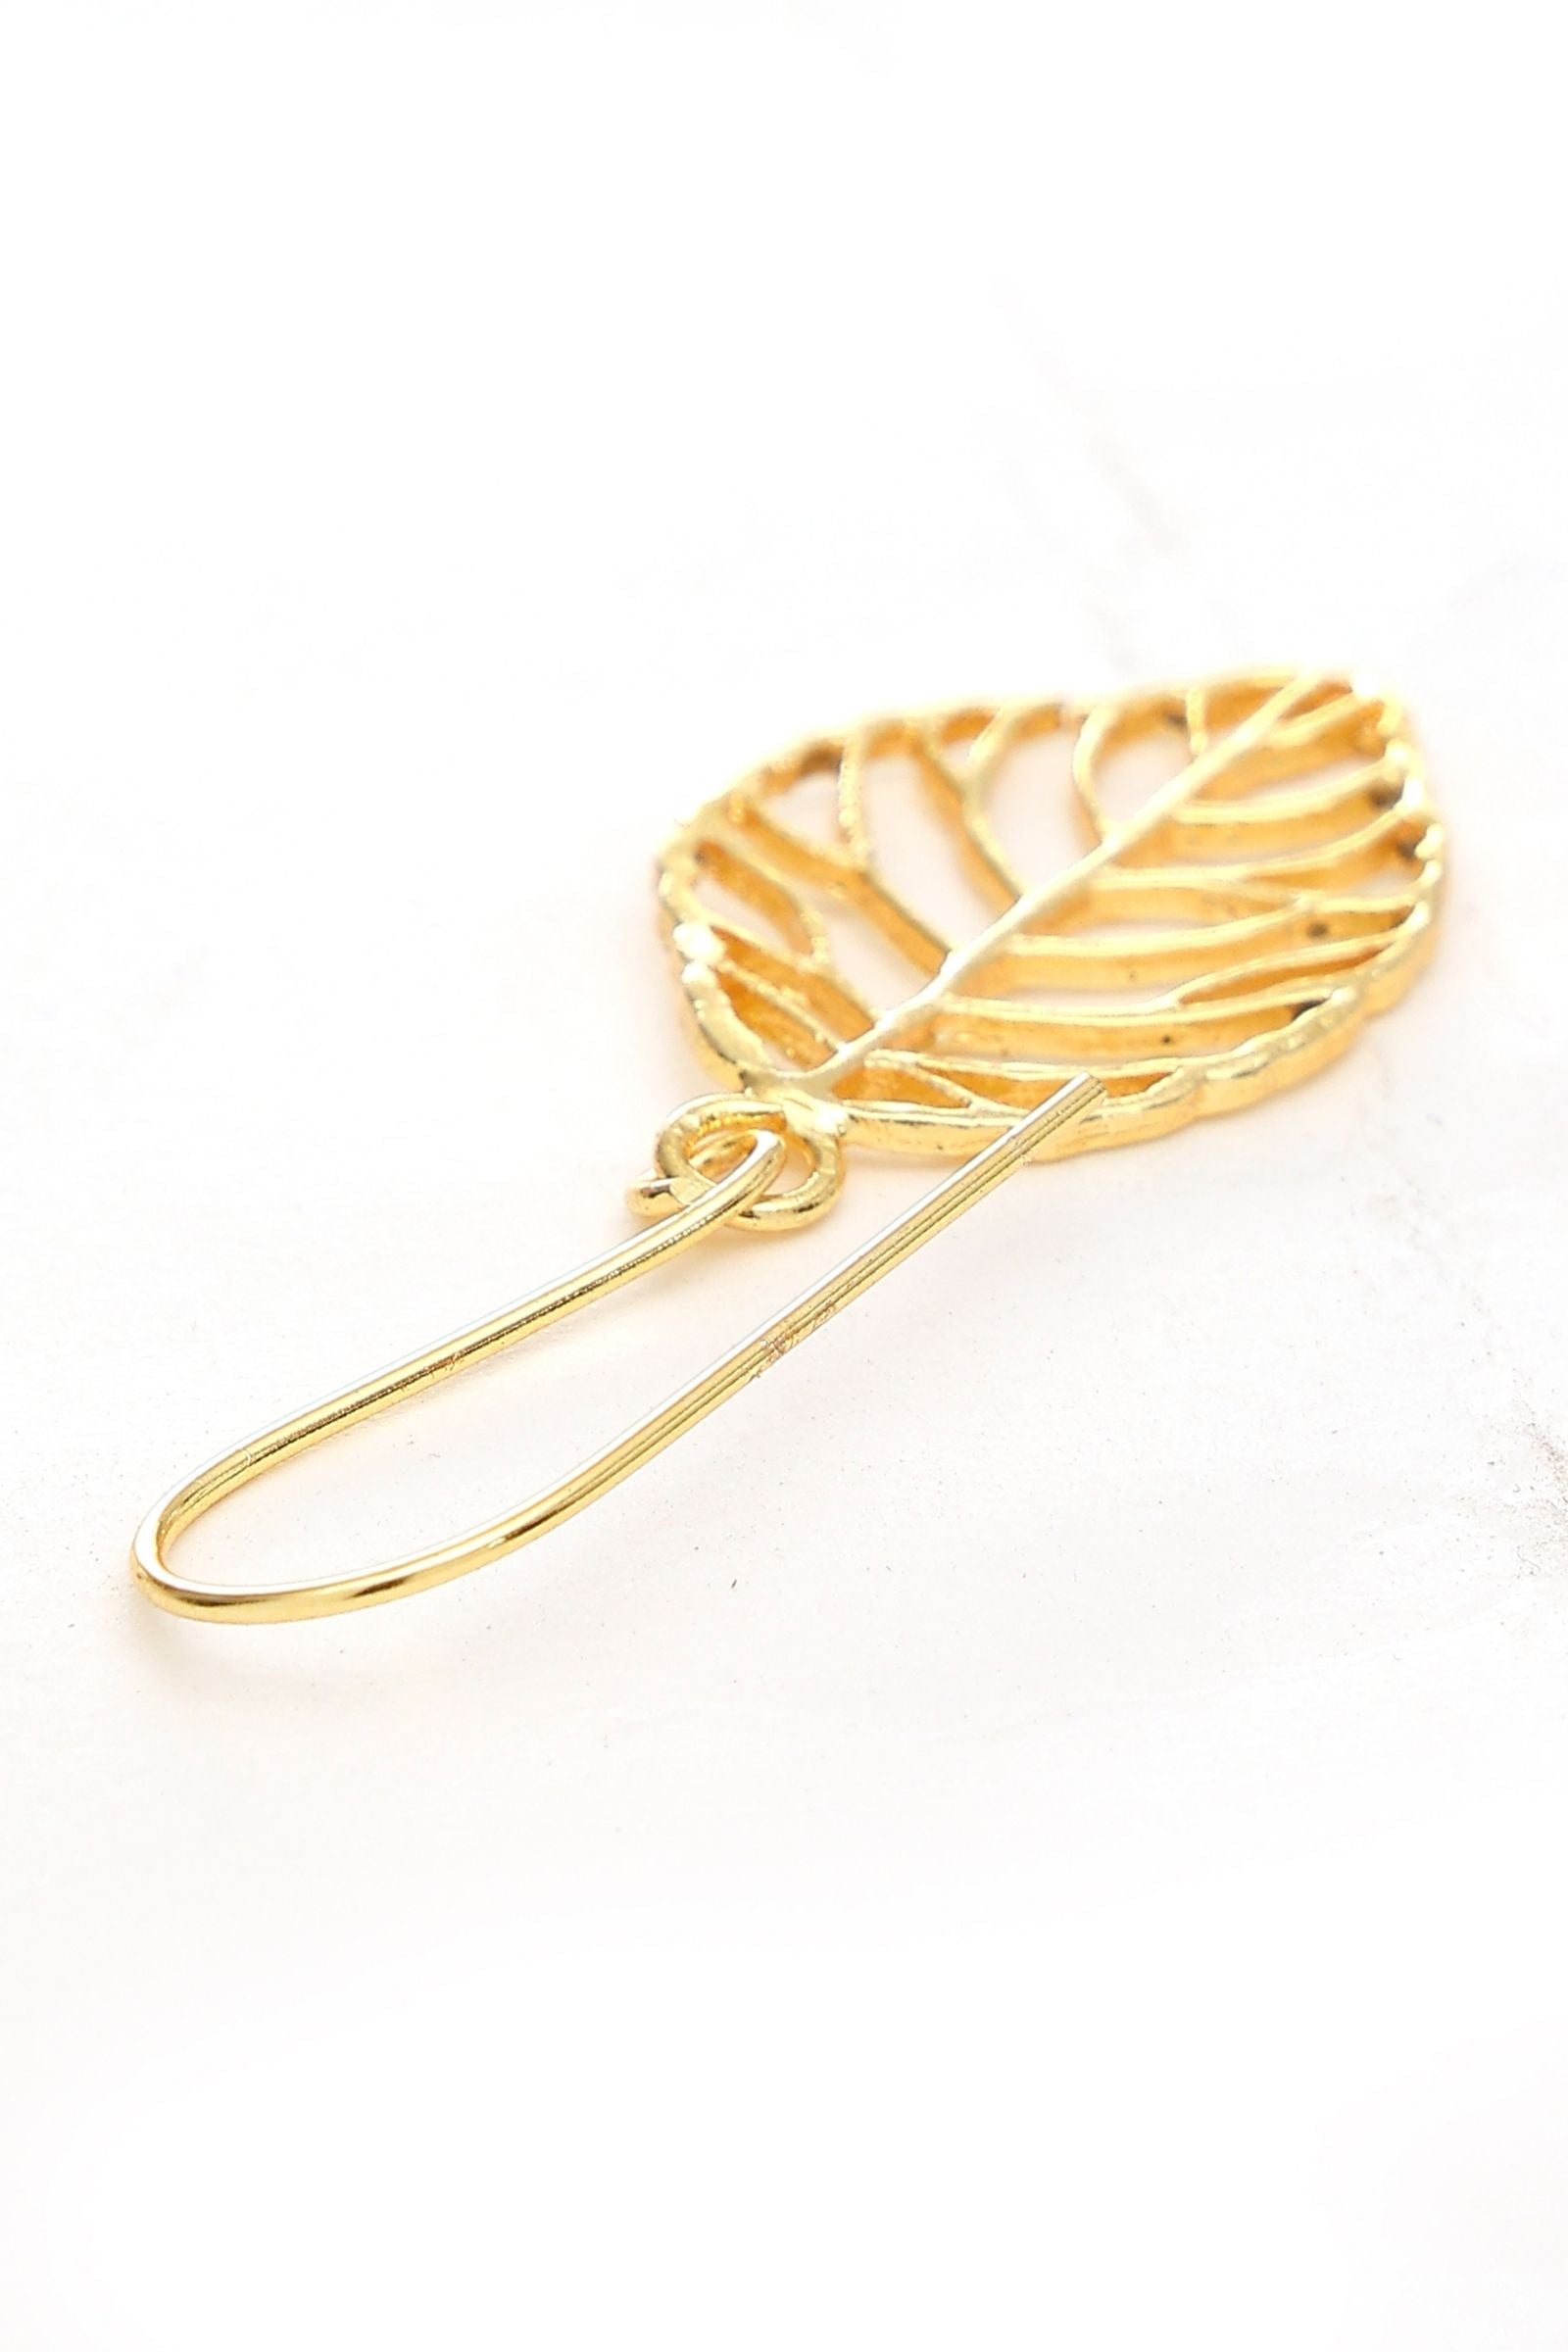 Gold Leaf Earring